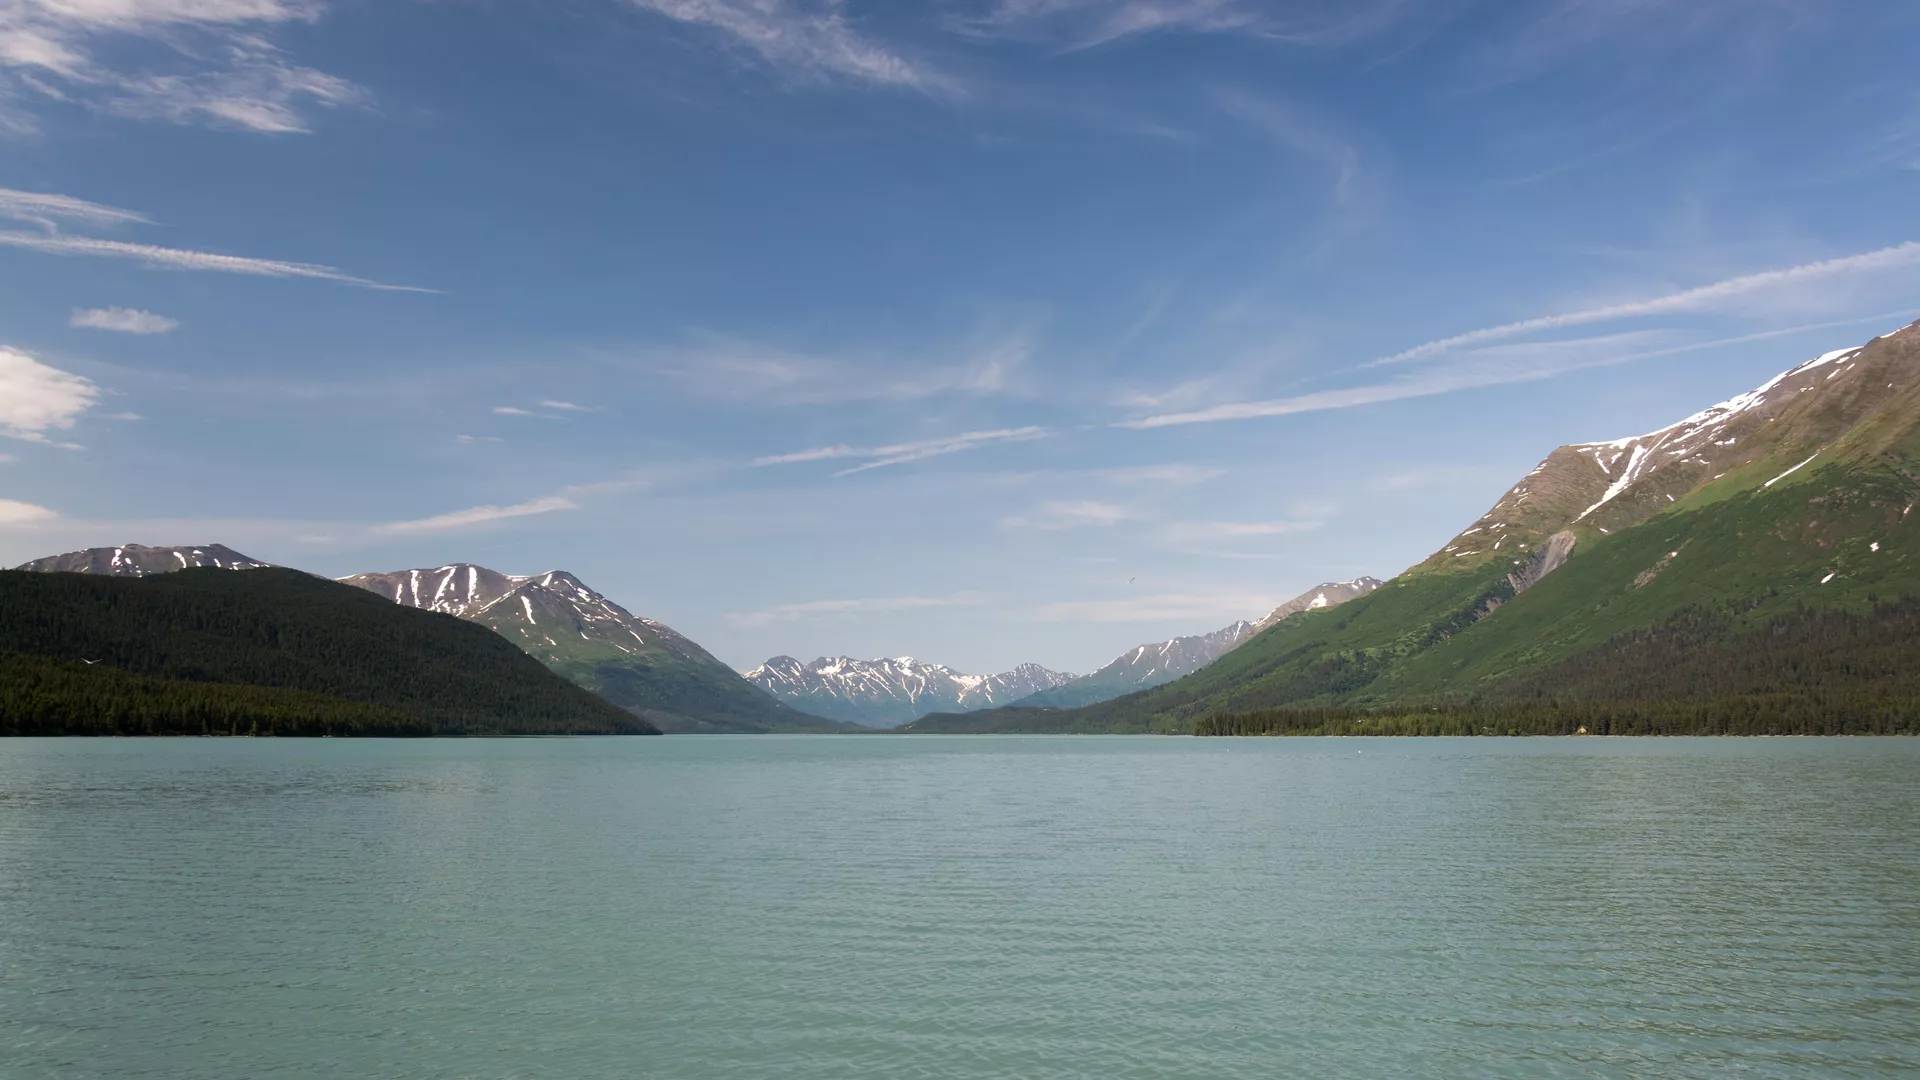 Biden Approves Alaska LNG Project,Angering Environmental Advocates